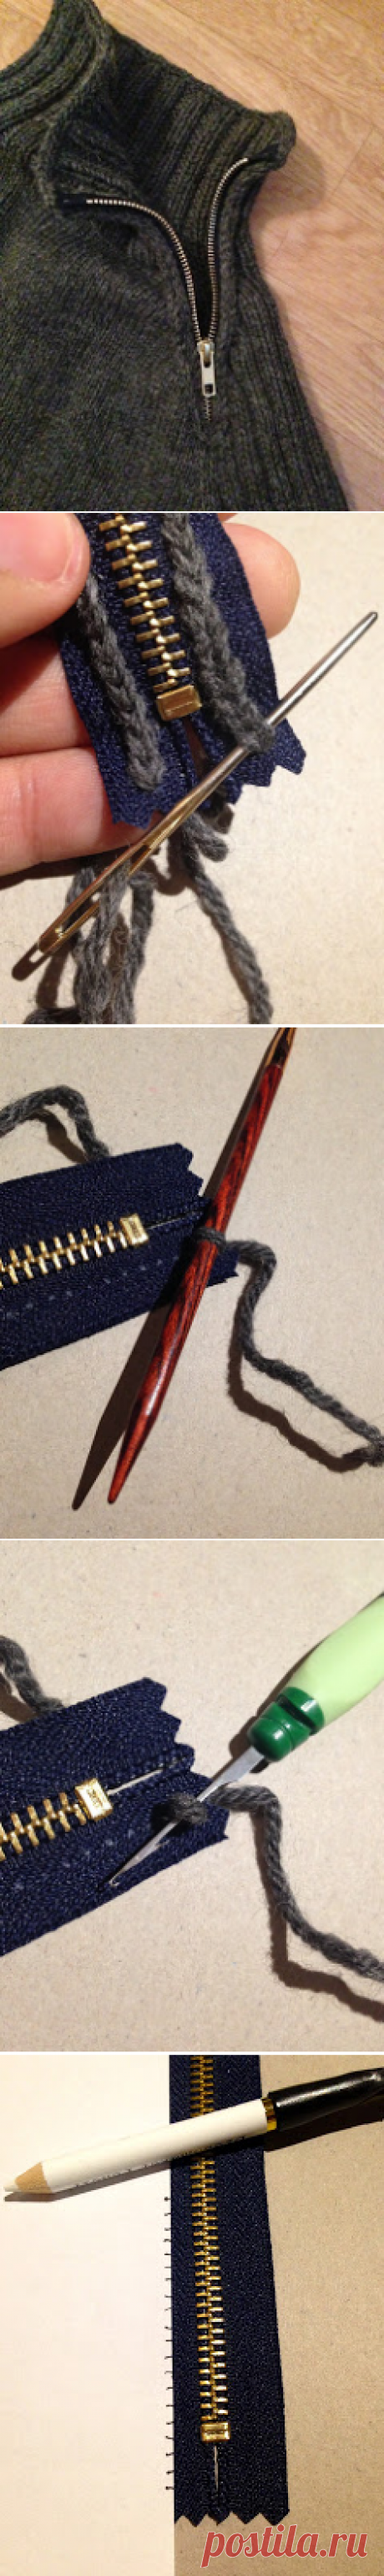 Frog Knitting: Att sy i dragkedjor / Installing zippers